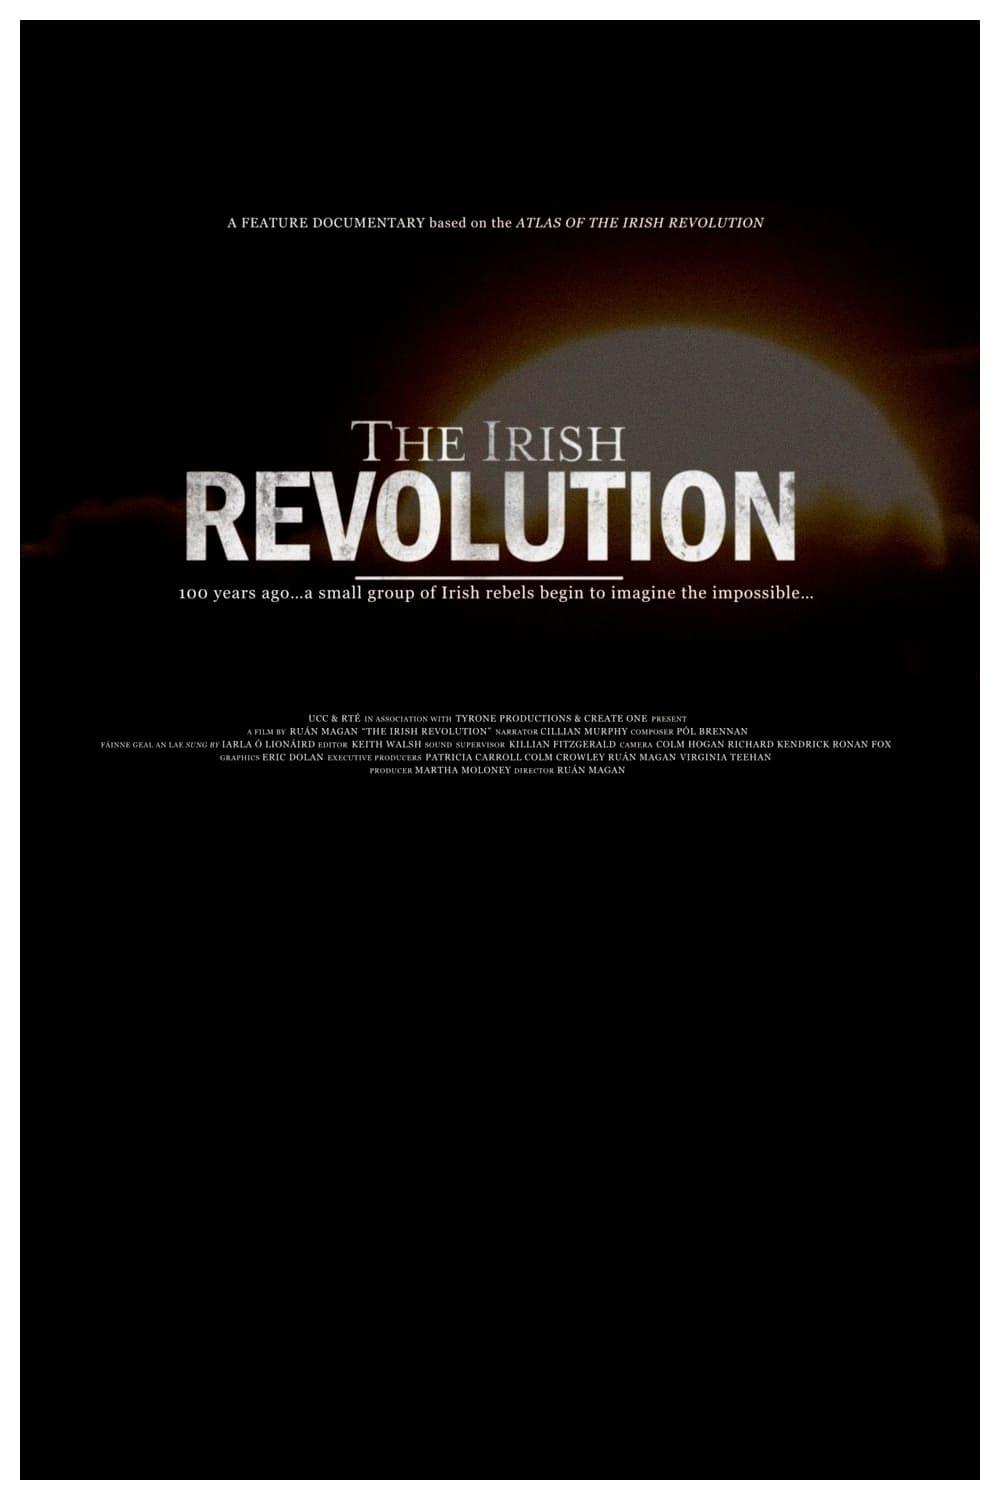 The Irish Revolution poster